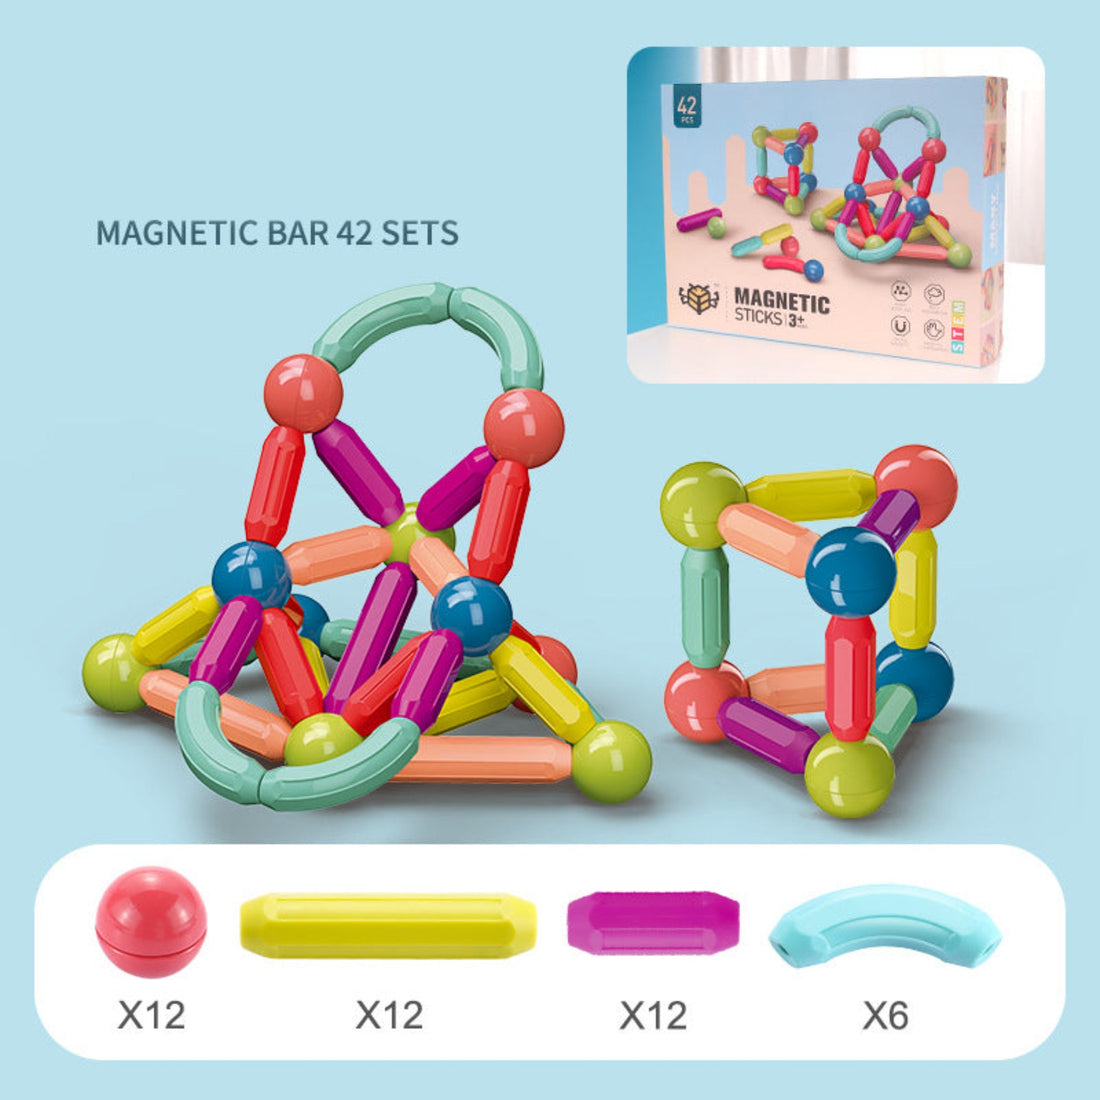 STEM education magnetic toy for children